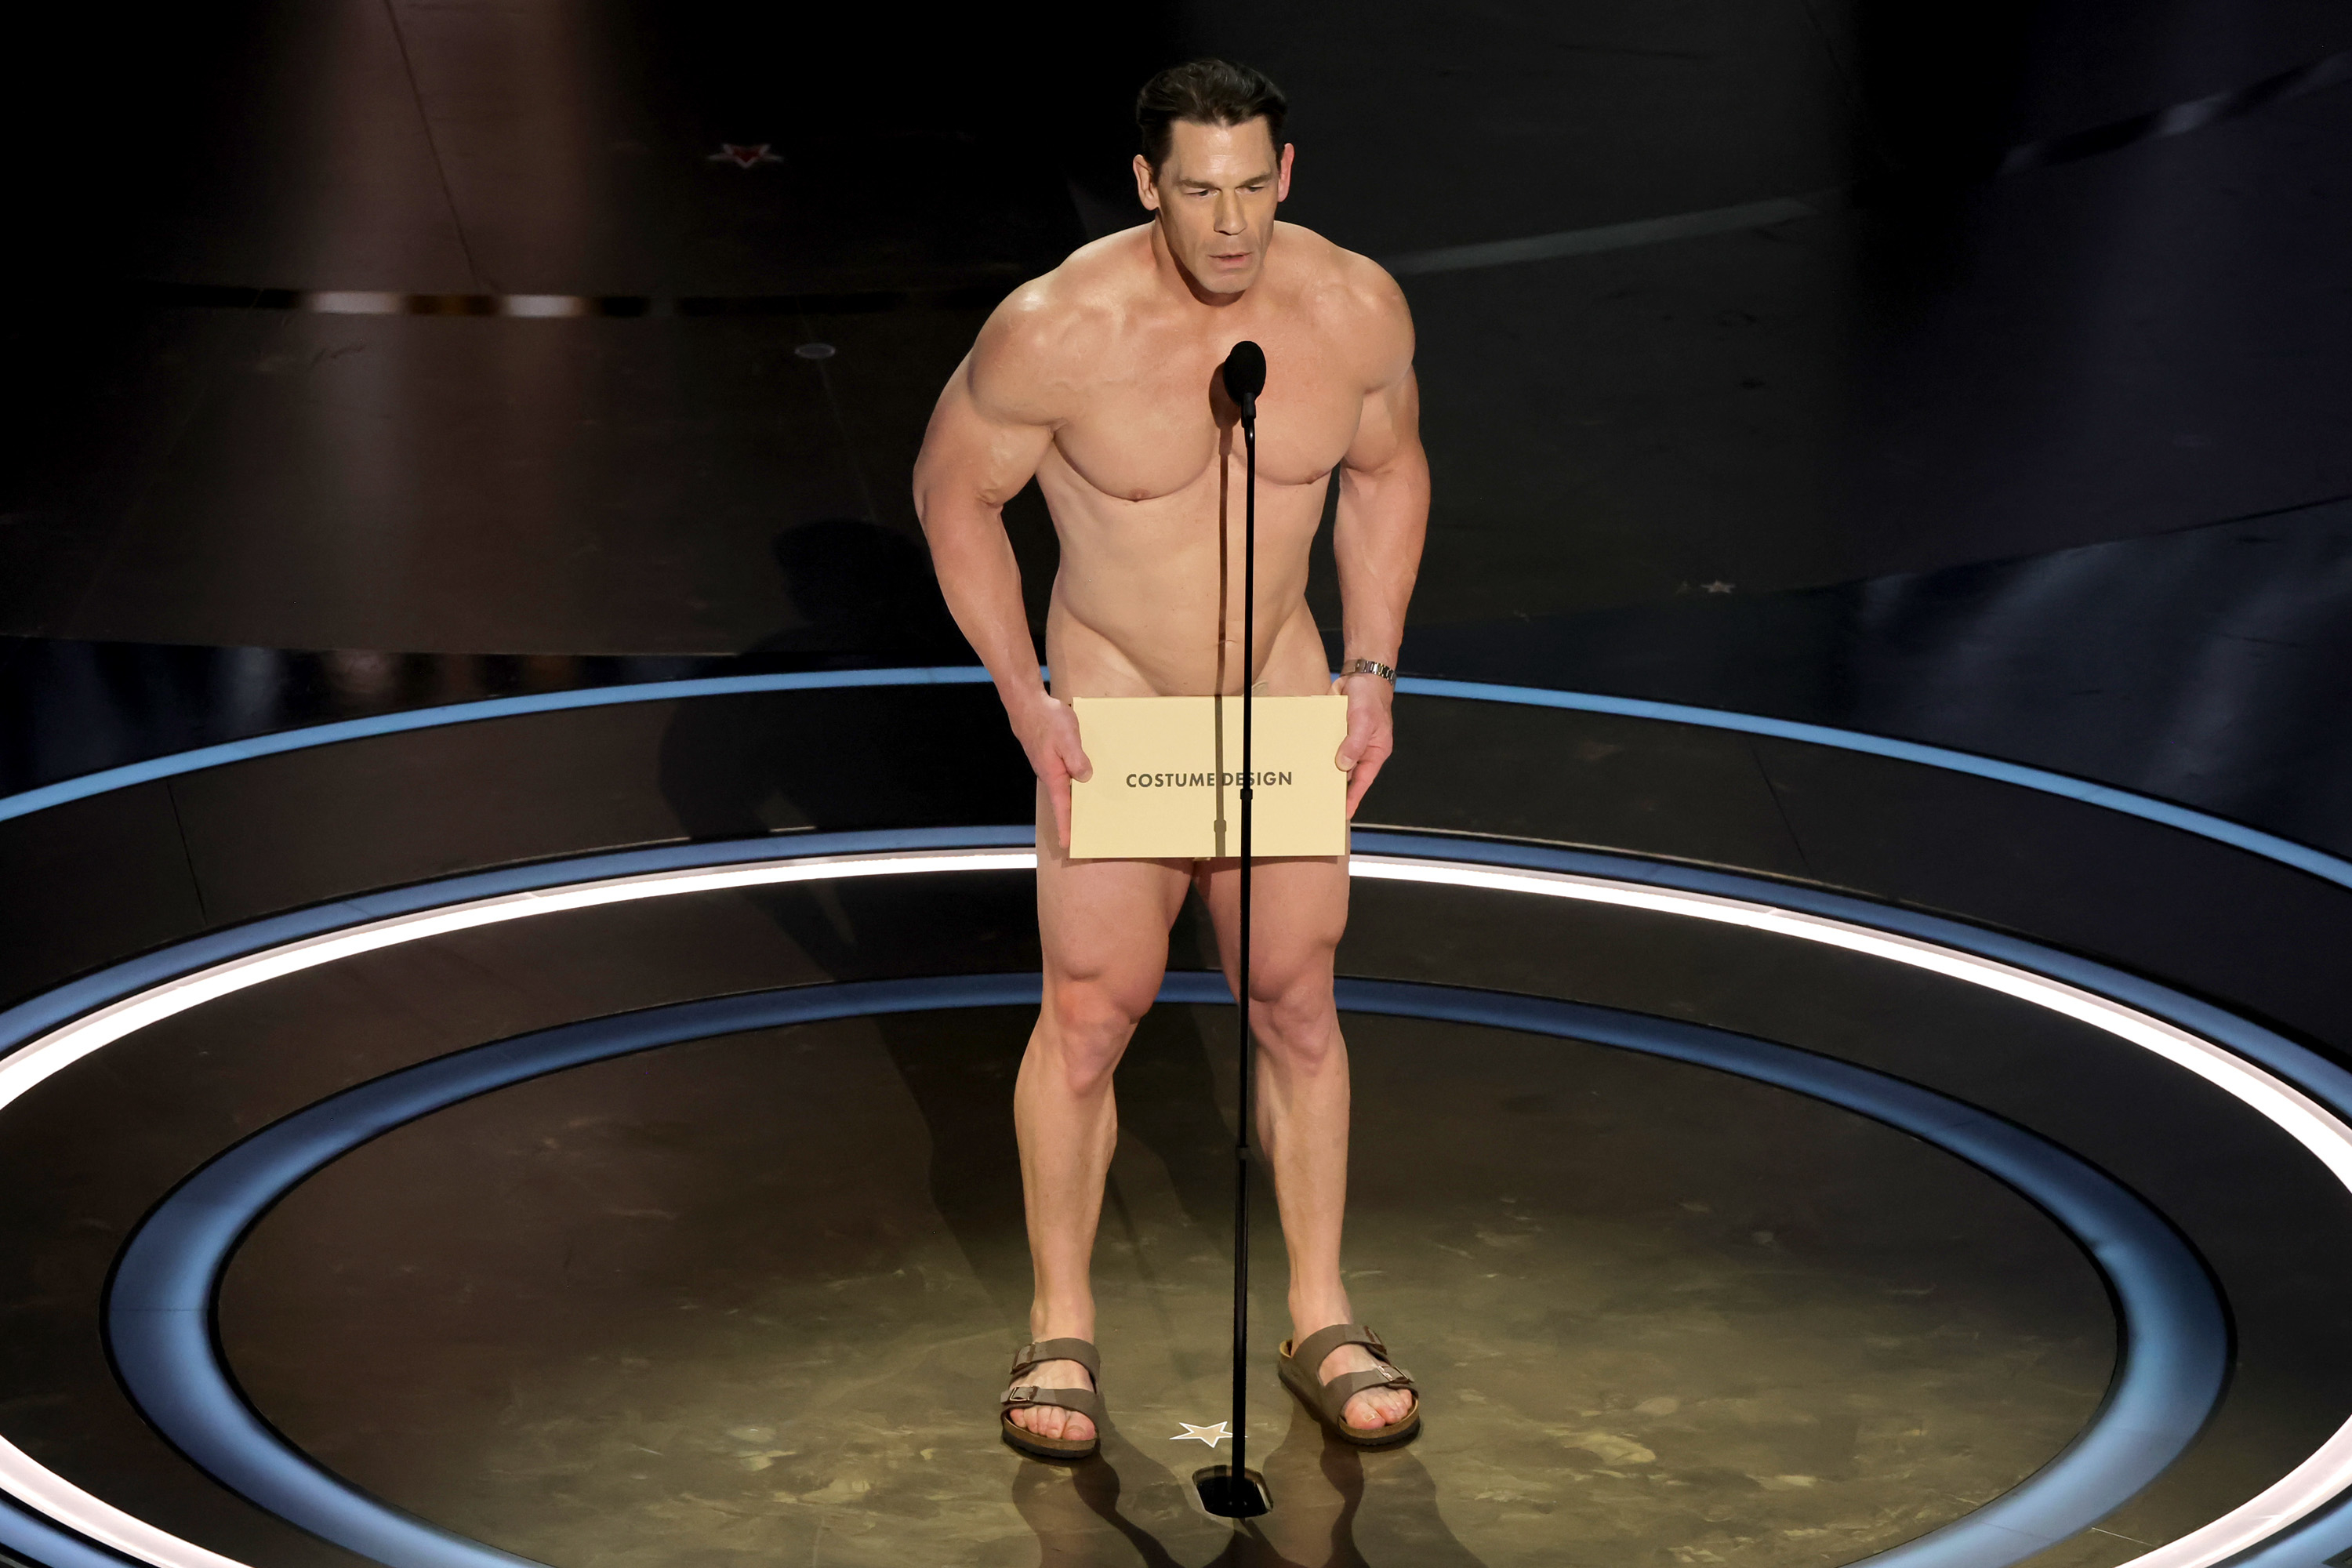 John Cena naked onstage at the Oscars